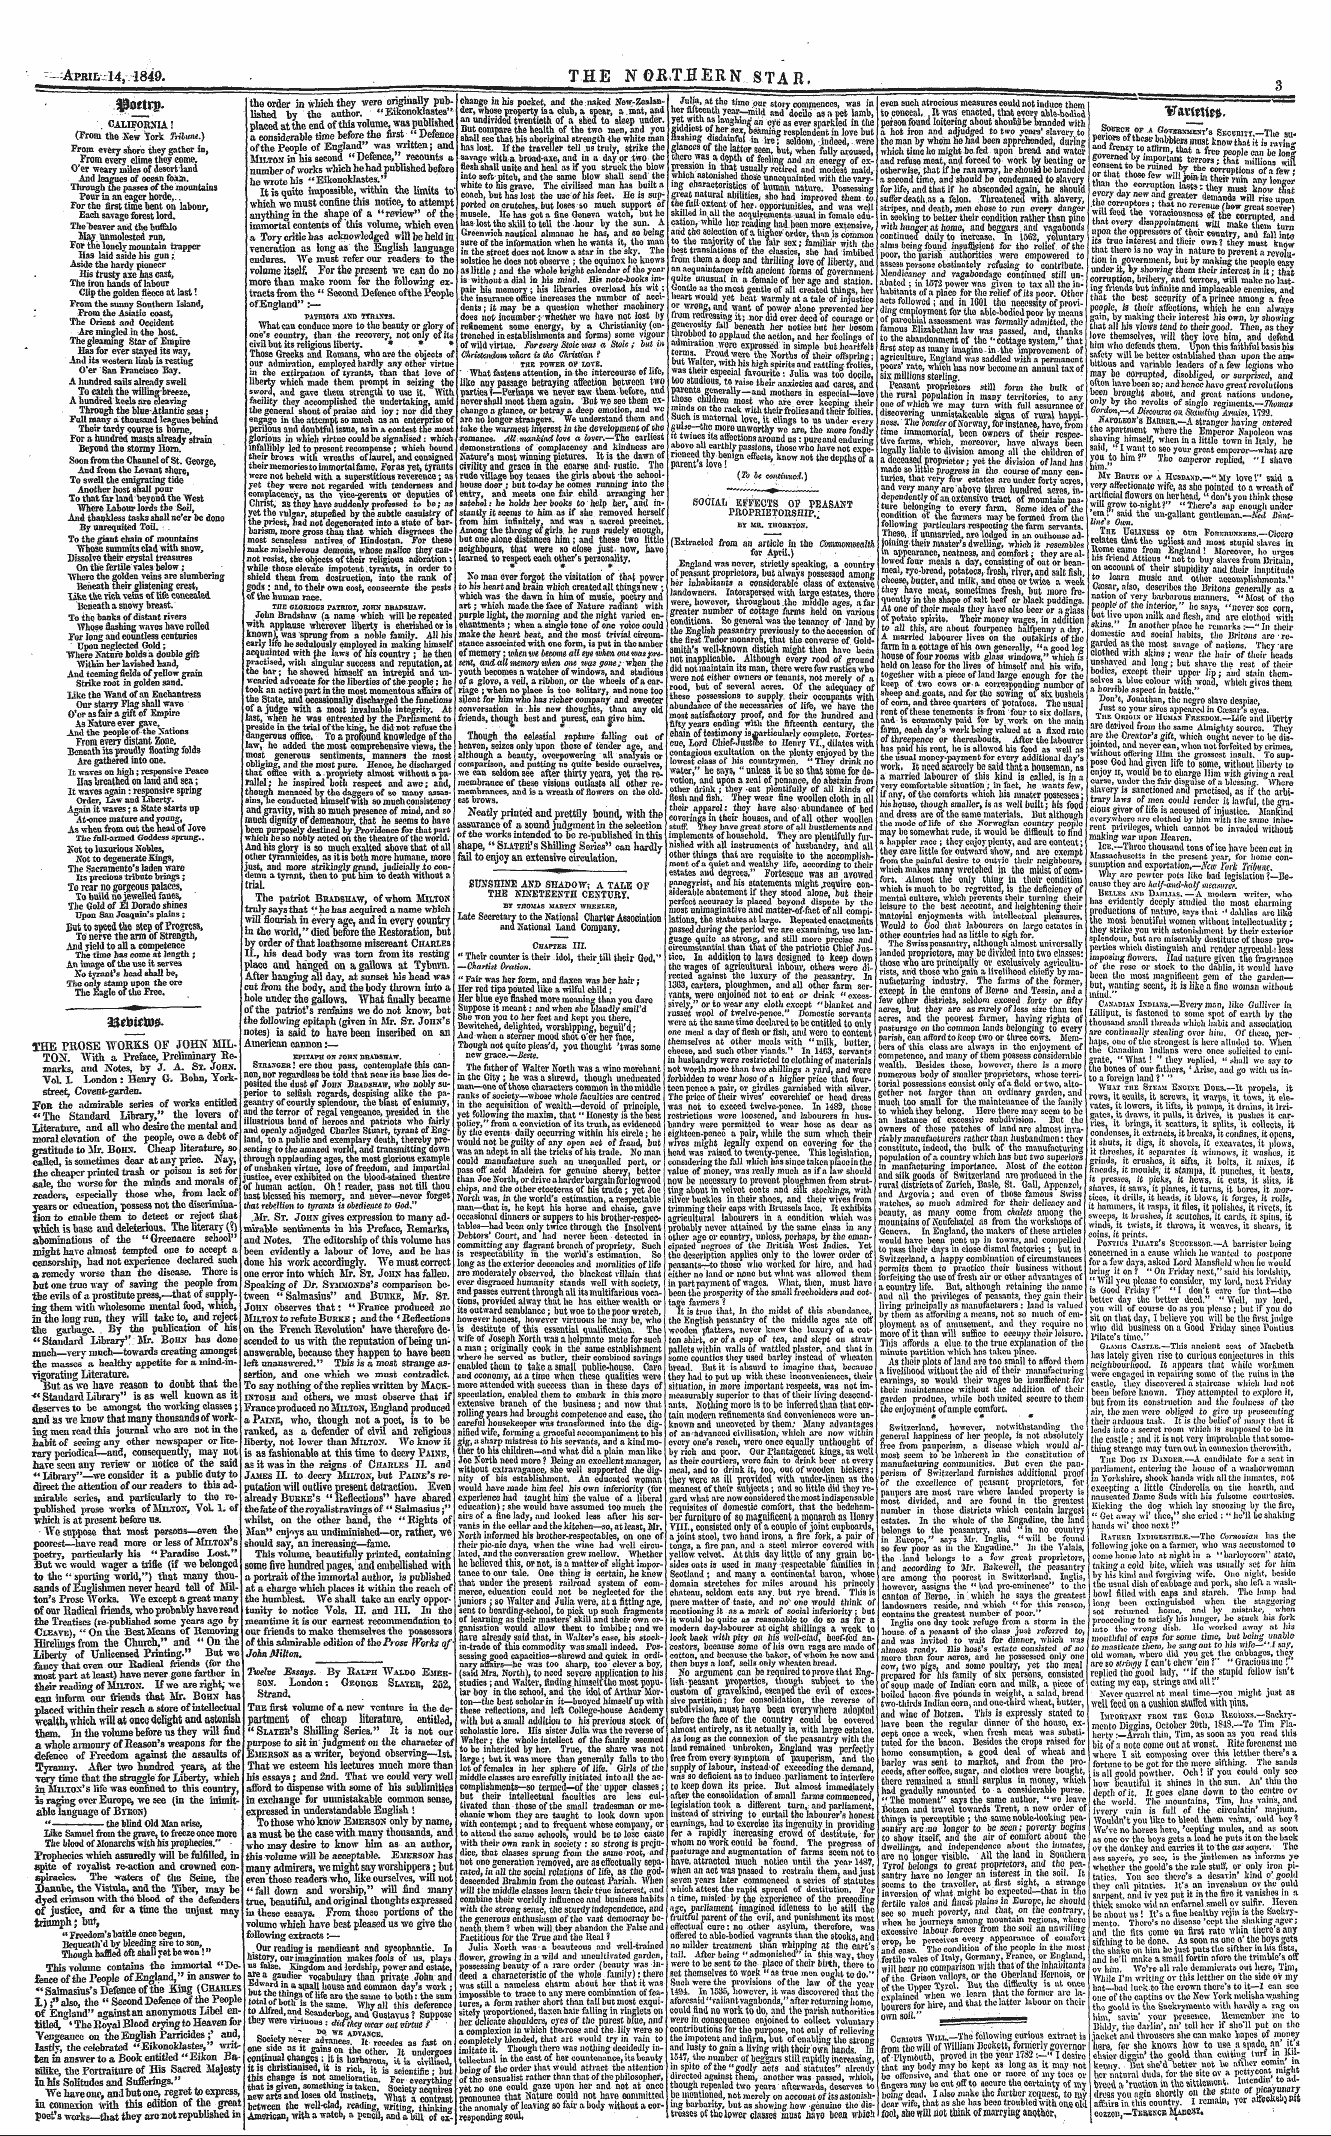 Northern Star (1837-1852): jS F Y, 3rd edition - Itfmmn.